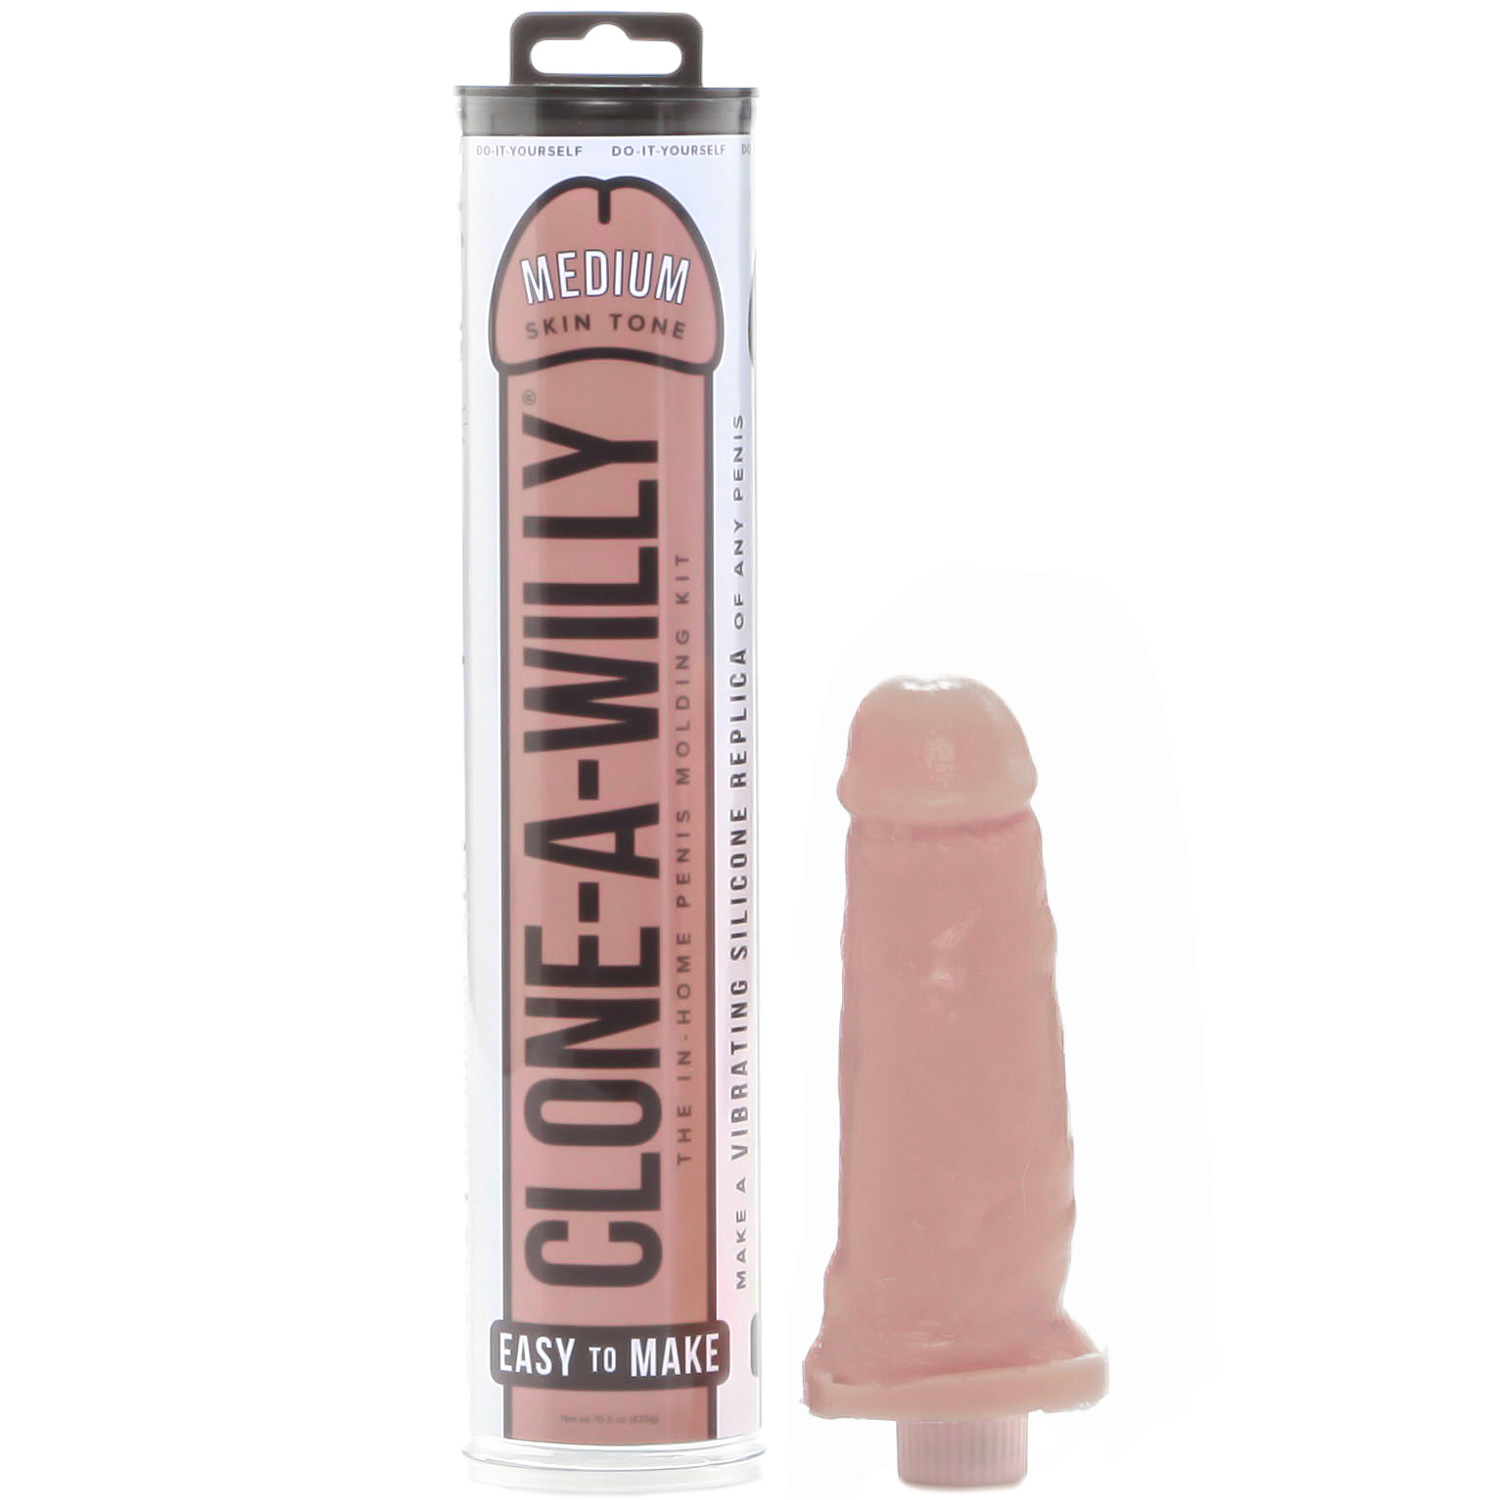 Clone-A-Willy DIY Homemade Dildo Clone Kit Medium Skin Tone - Nude thumbnail